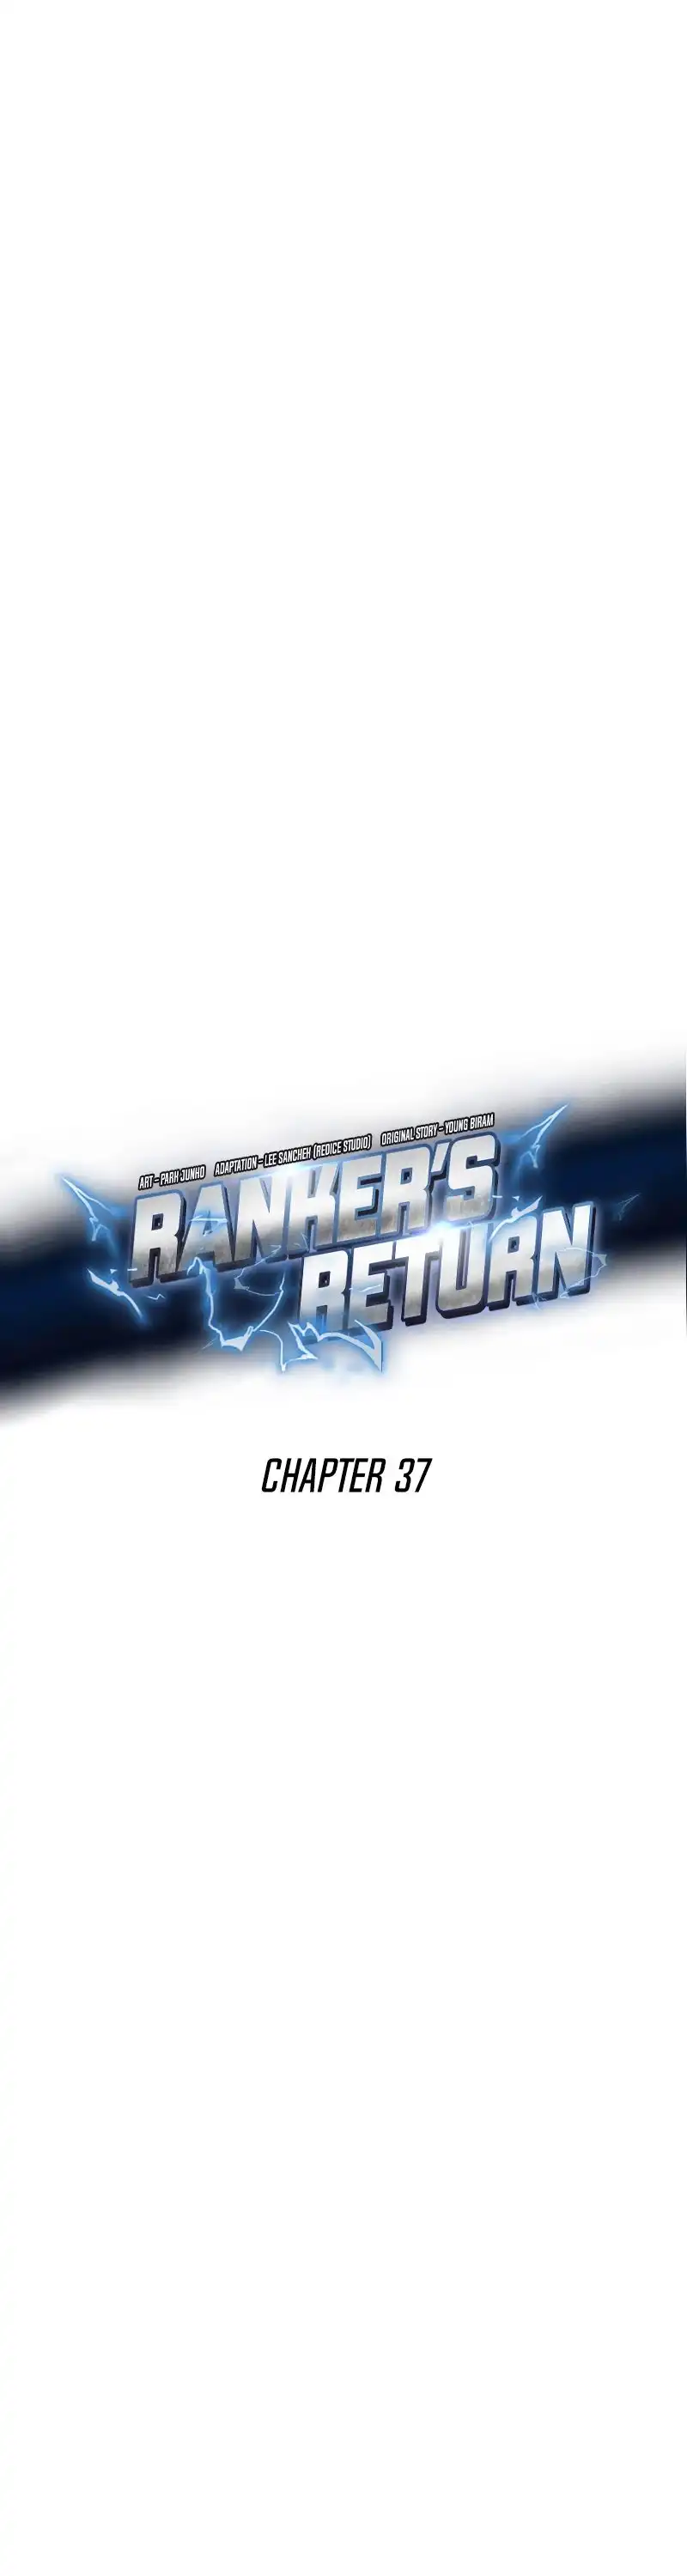 Ranker's Return (Remake) Chapter 37